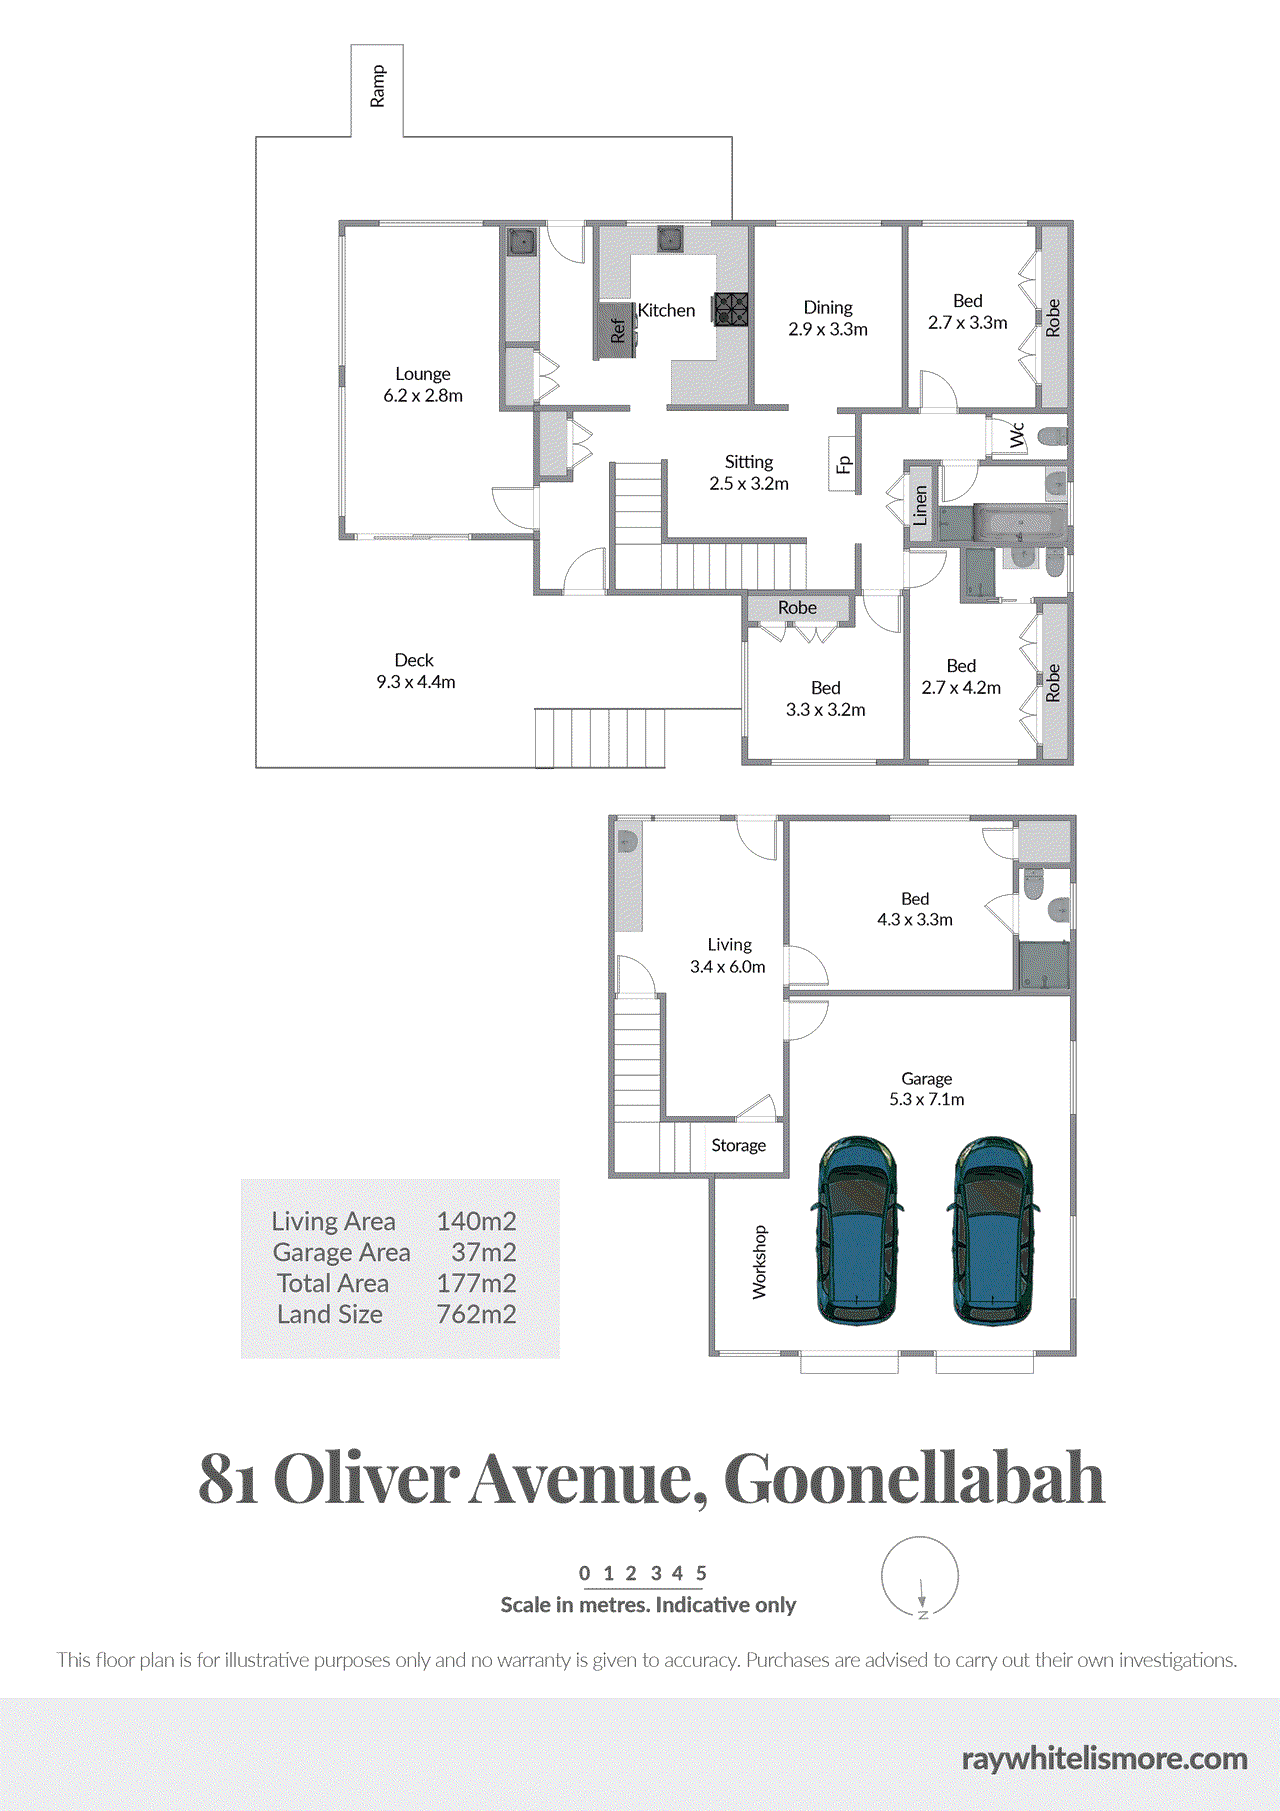 81 Oliver Avenue, GOONELLABAH, NSW 2480